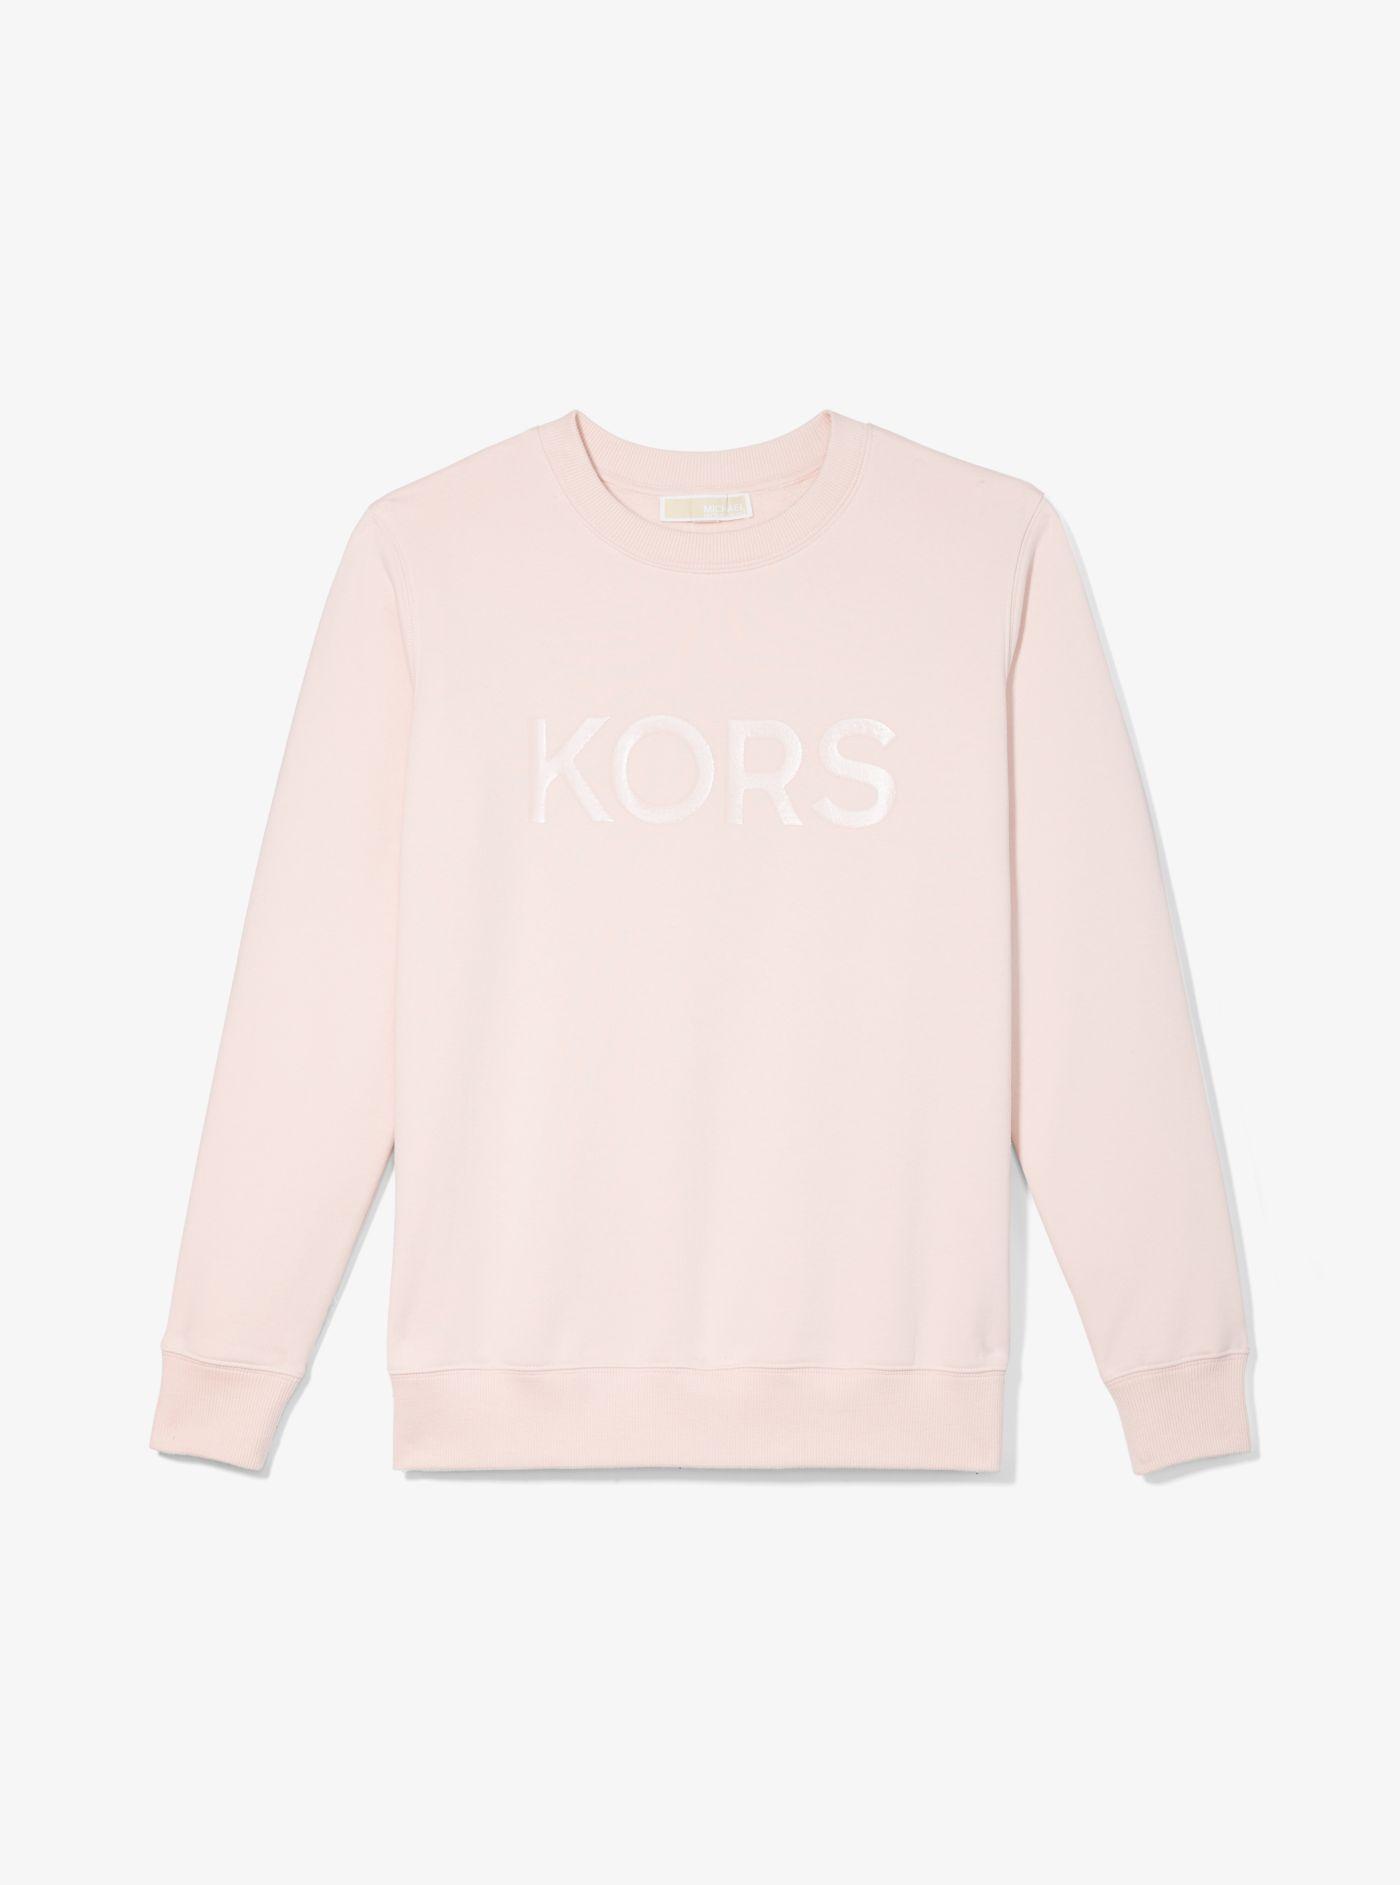 Michael Kors Logo Organic Cotton Blend Sweatshirt in Pink | Lyst